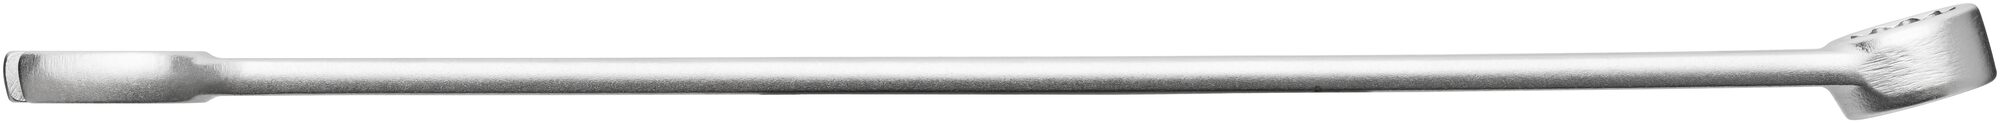 HAZET Ring-Maulschlüssel · extra lang · schlanke Bauform 600LG-11 · Außen Doppel-Sechskant-Tractionsprofil · 11 mm